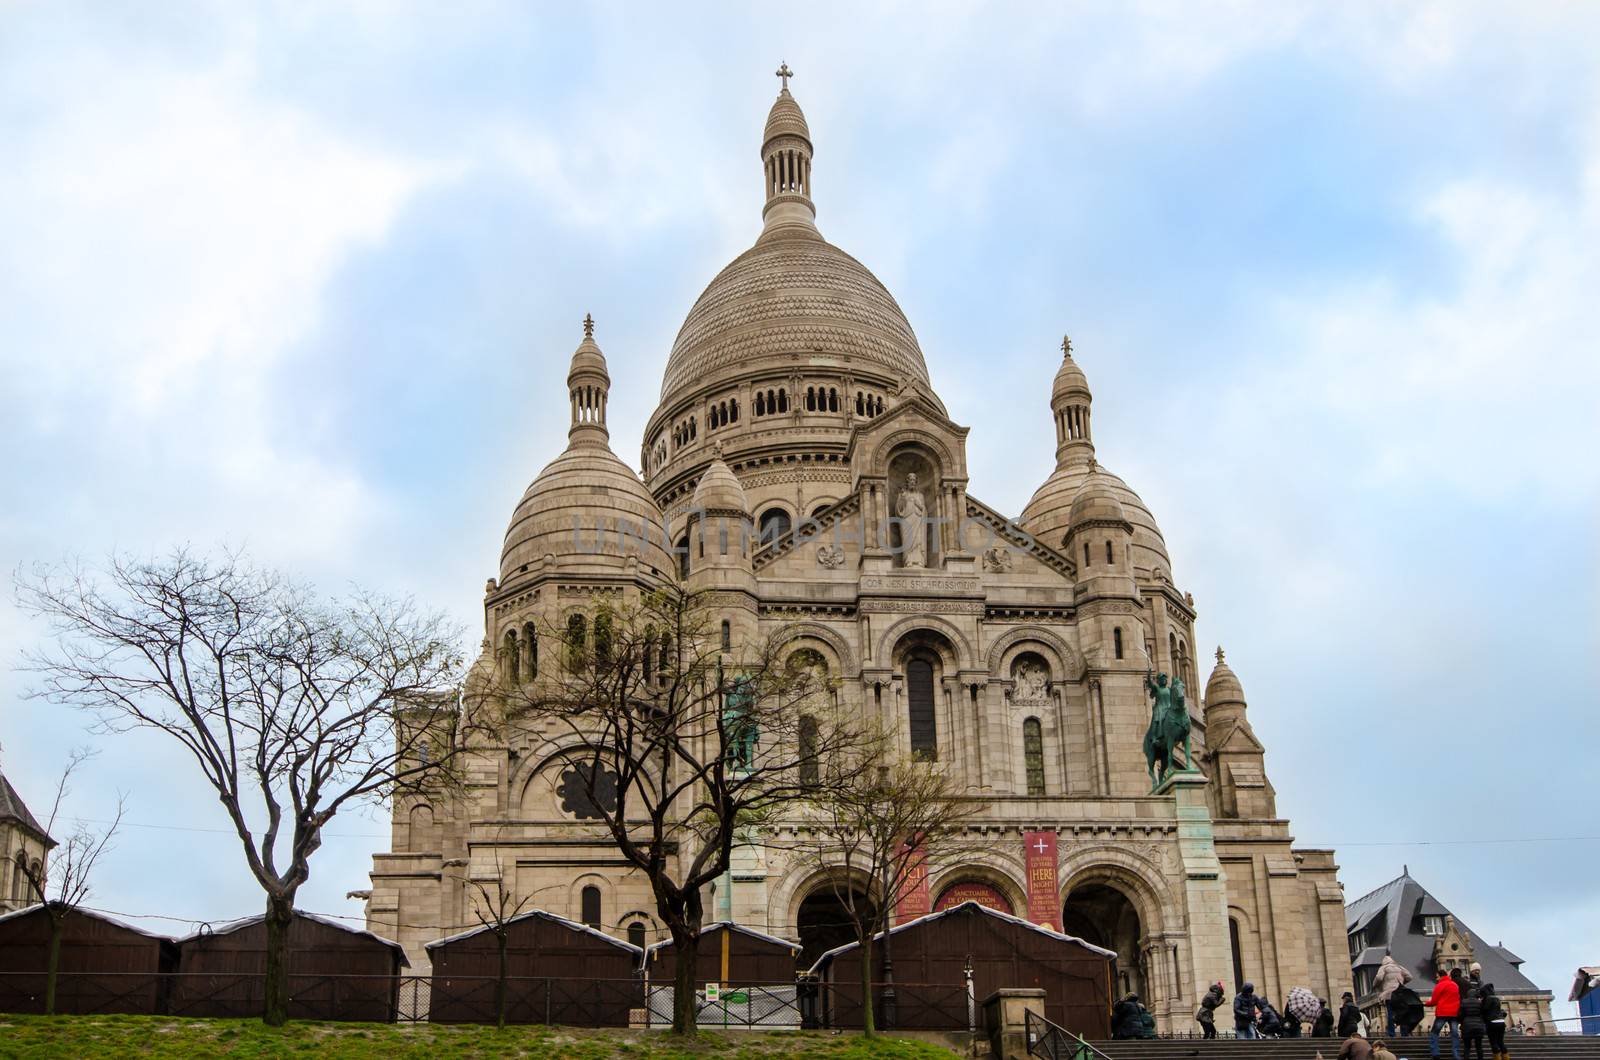 Sacre-Cœur Church is located in Paris. In France